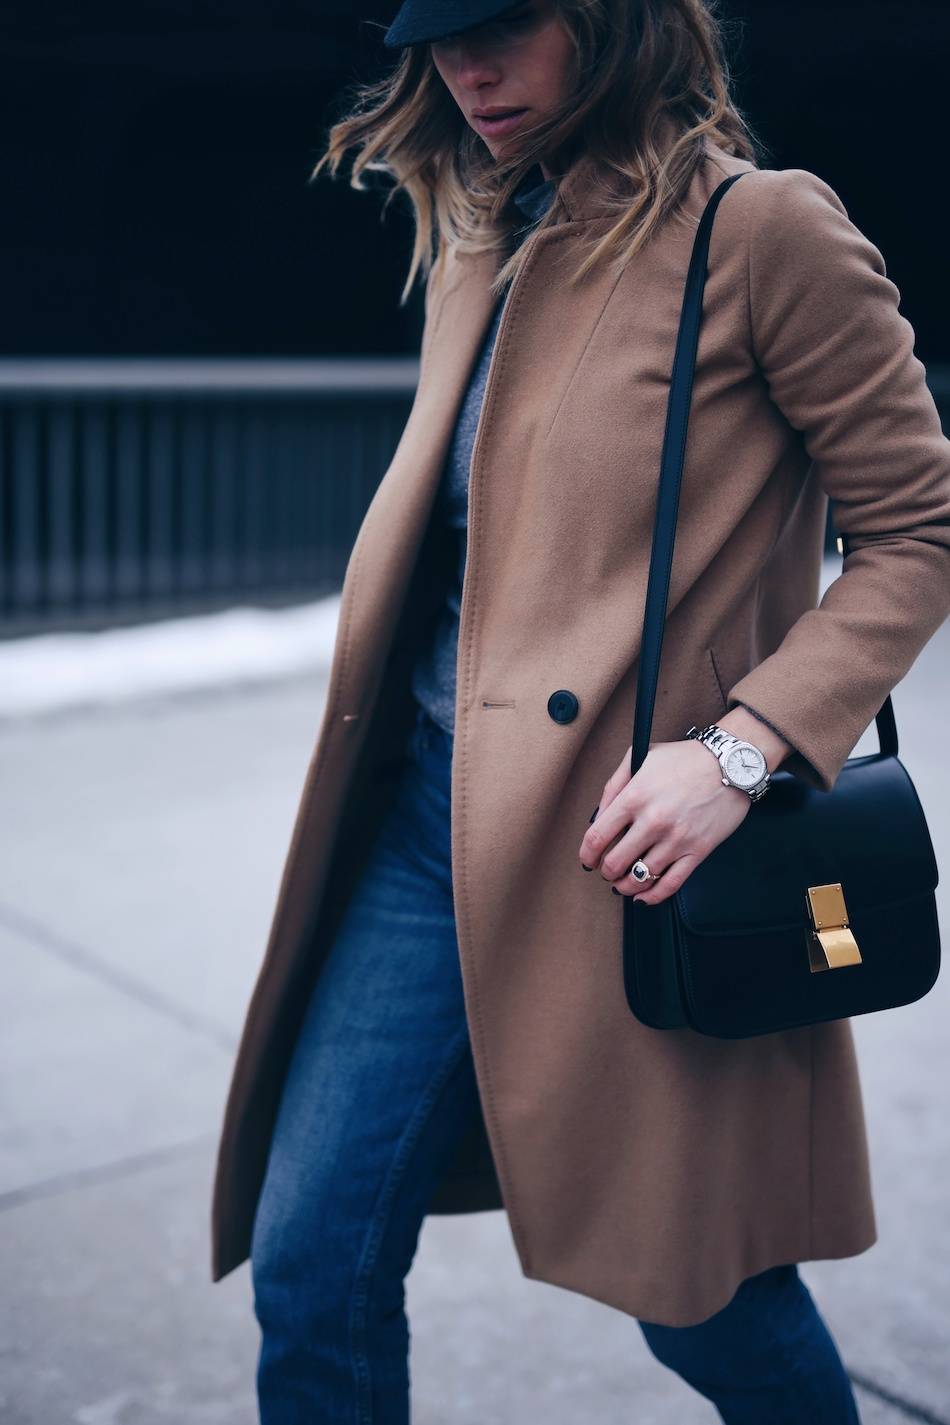 Style and beauty blogger Jill Lansky of The August Diaries Isabel marant Eva newsboy cap, camel coat, Parisian style, tag heuer watch, Celine box bag